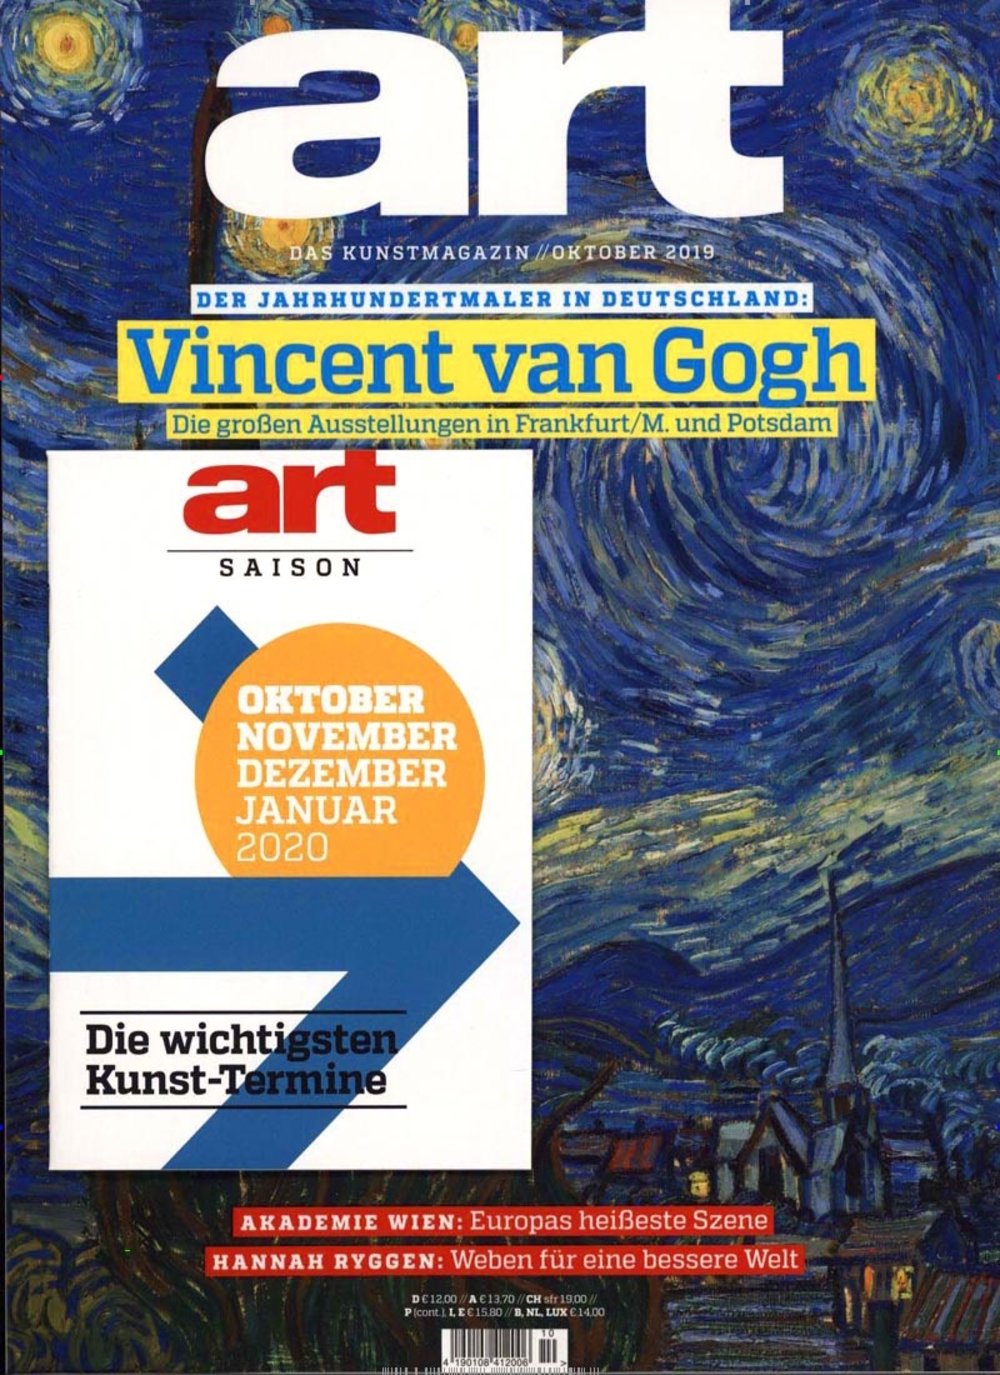 Themenpaket "Van Gogh"